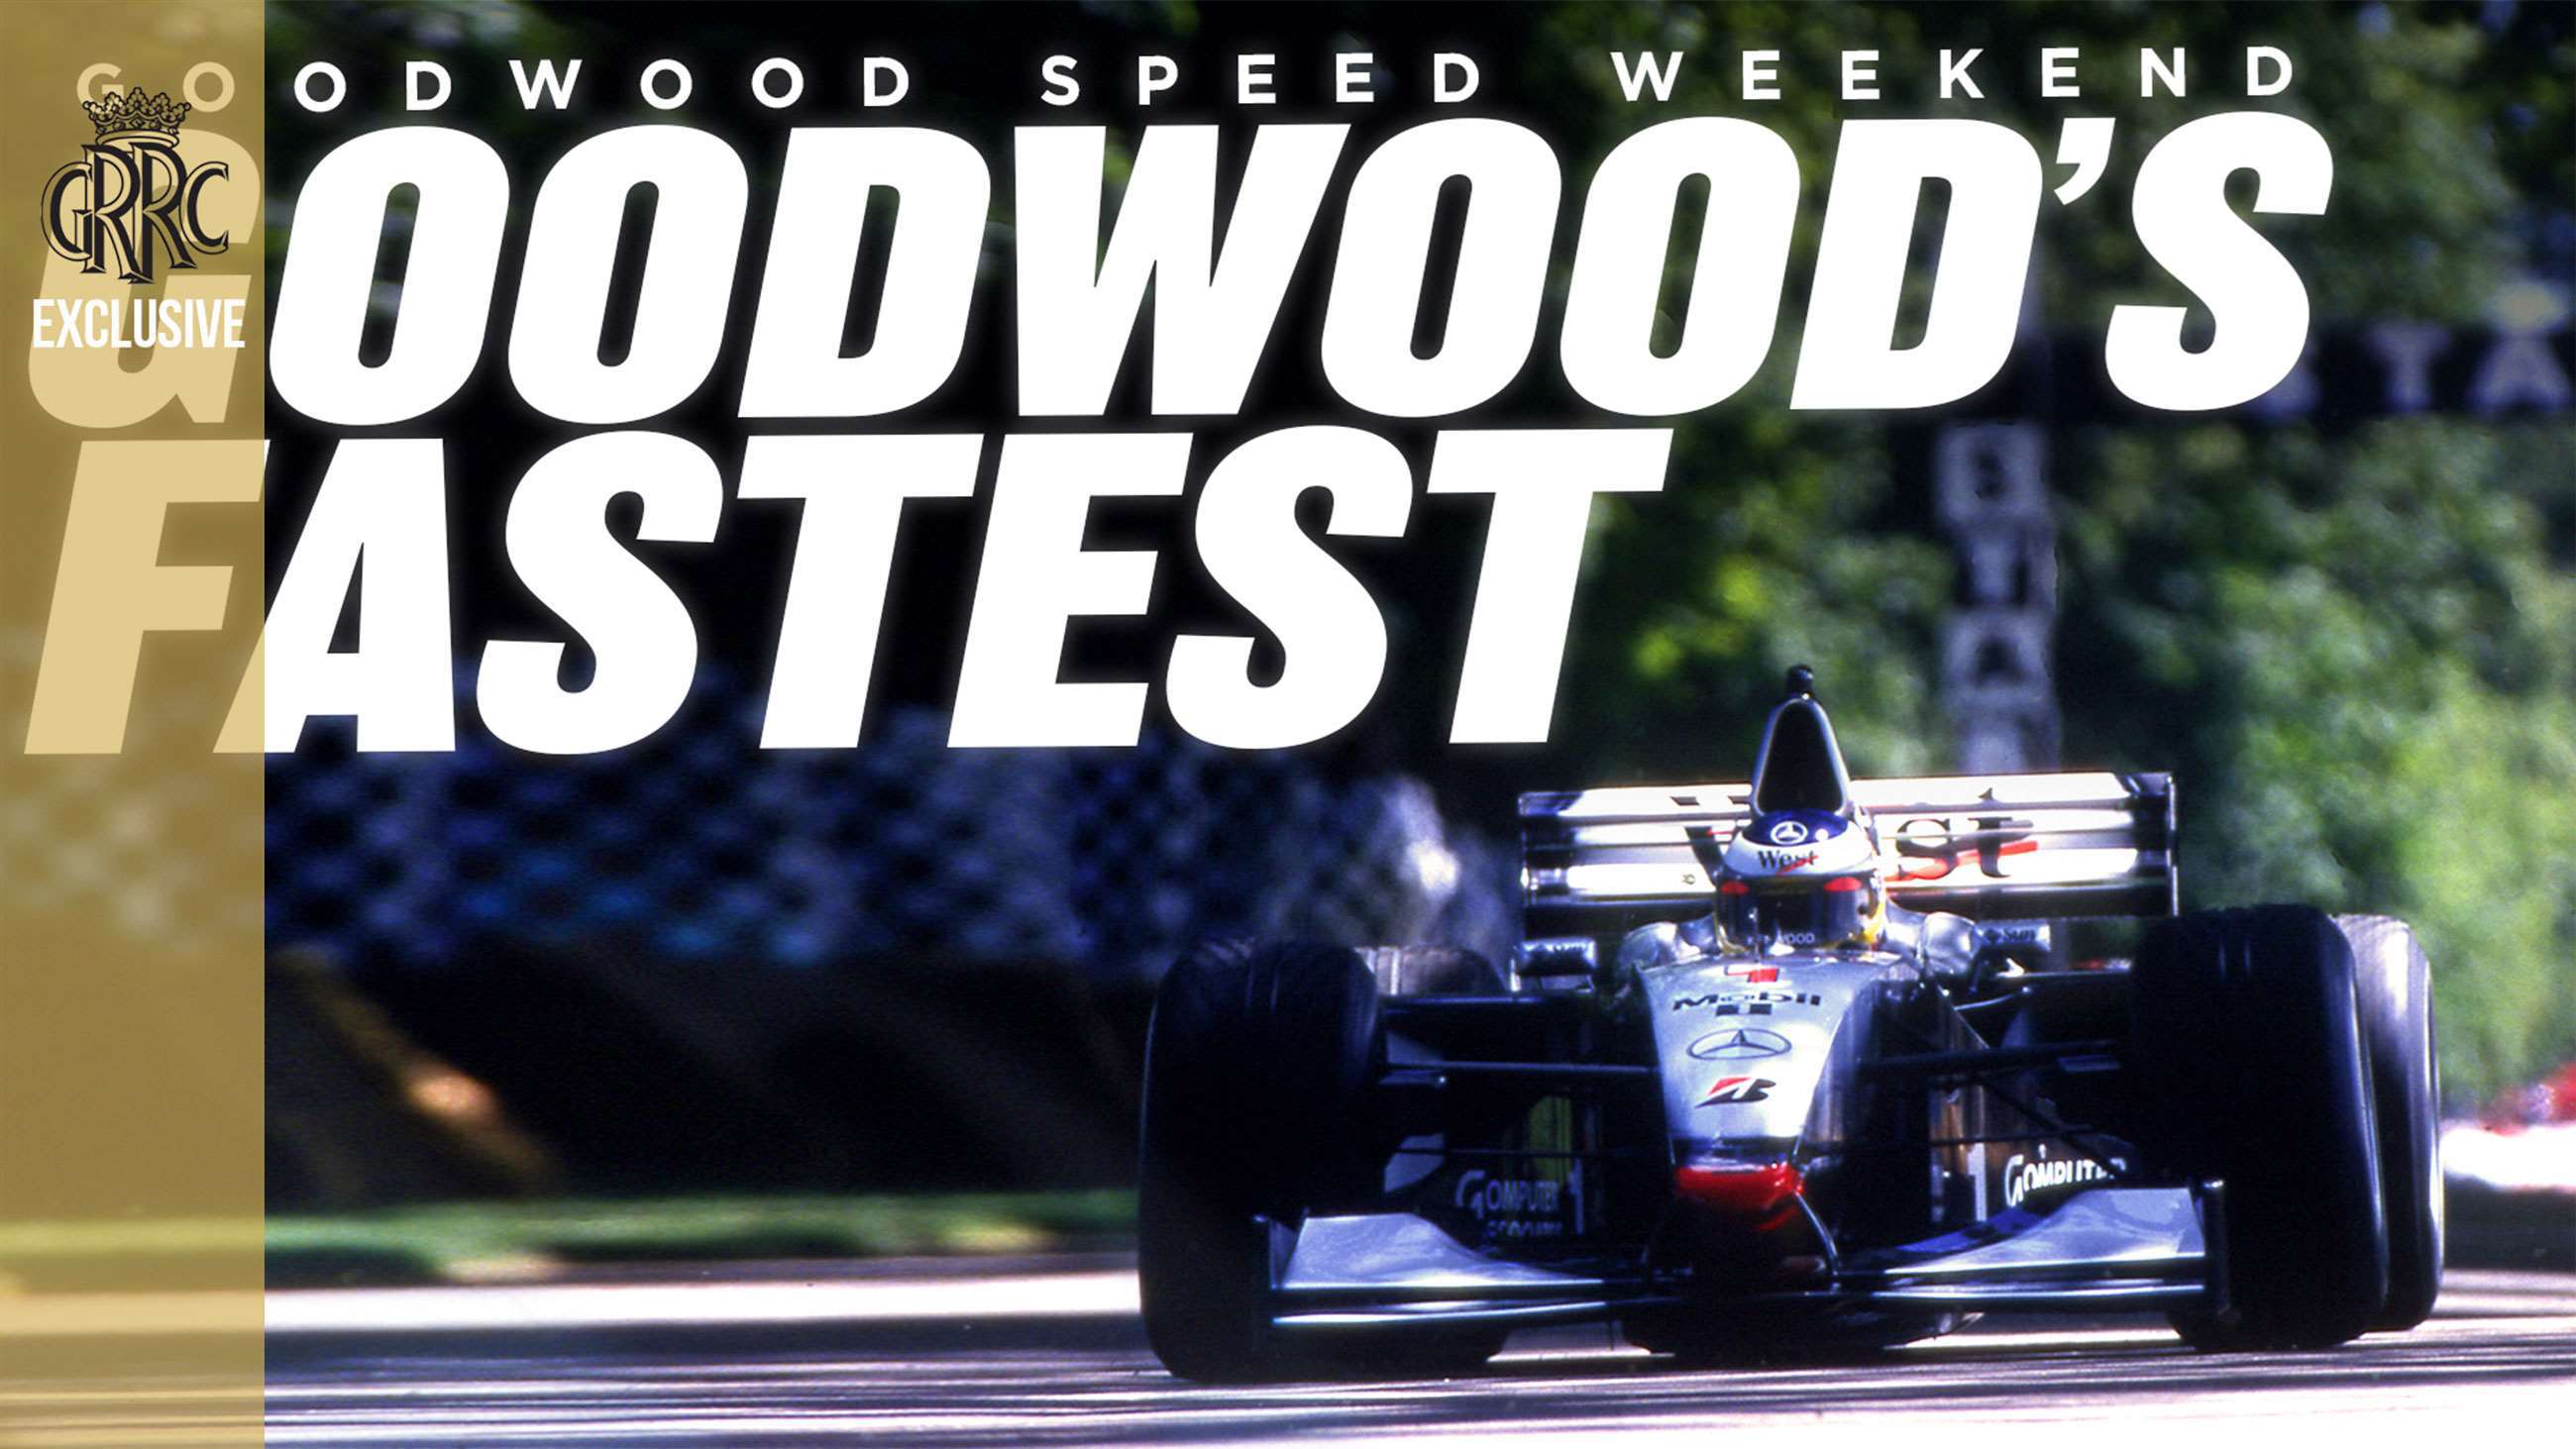 goodwood-fastest-stream-video-grrc-exclusive-goodwood-12052020.jpg